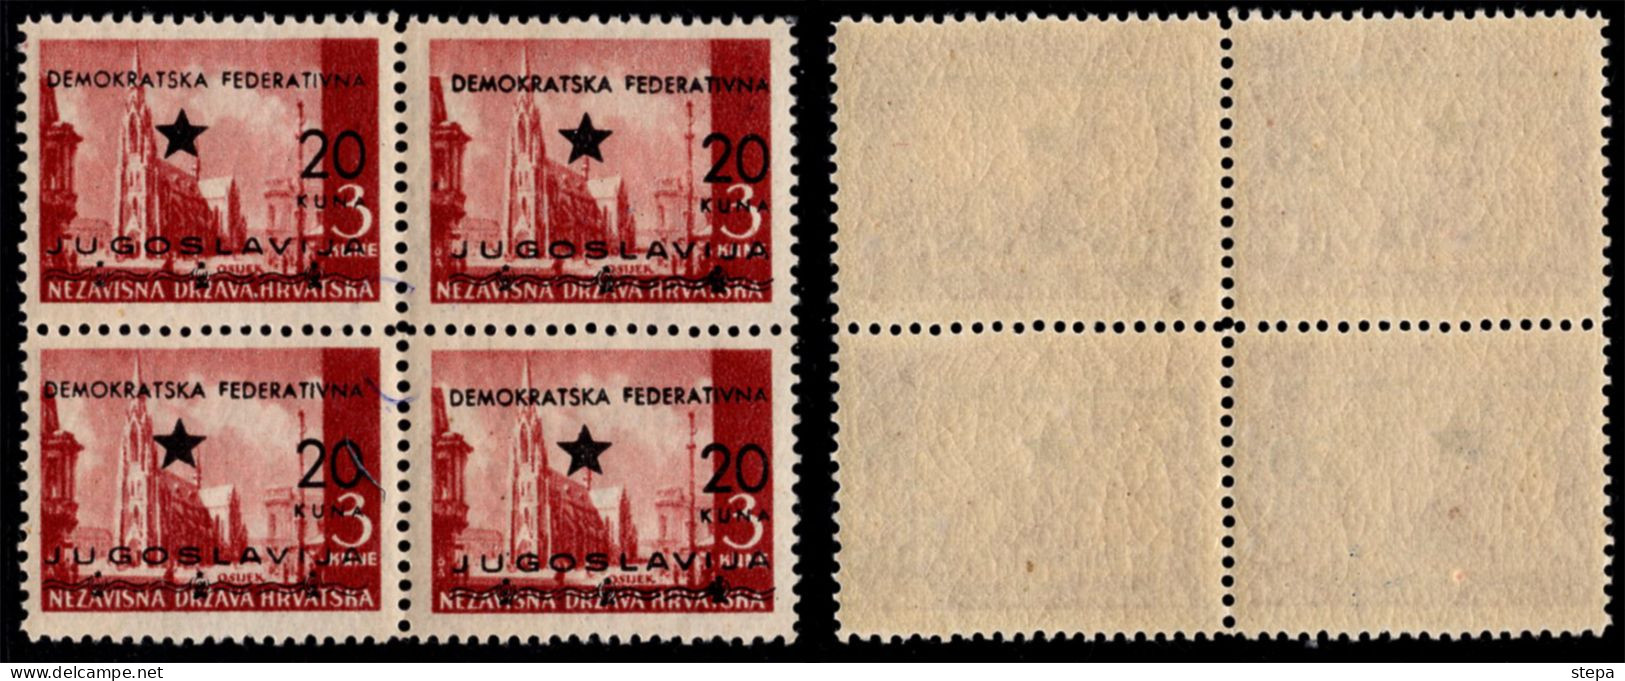 YUGOSLAVIA-CROATIA, PROVISIONAL ISSUE FOR SPLIT, 20/3 KUNA "LANDSCAPES" POROUS PAPER BLOCK OF FOUR, MNH 1945 RARE!!!! - Croatia